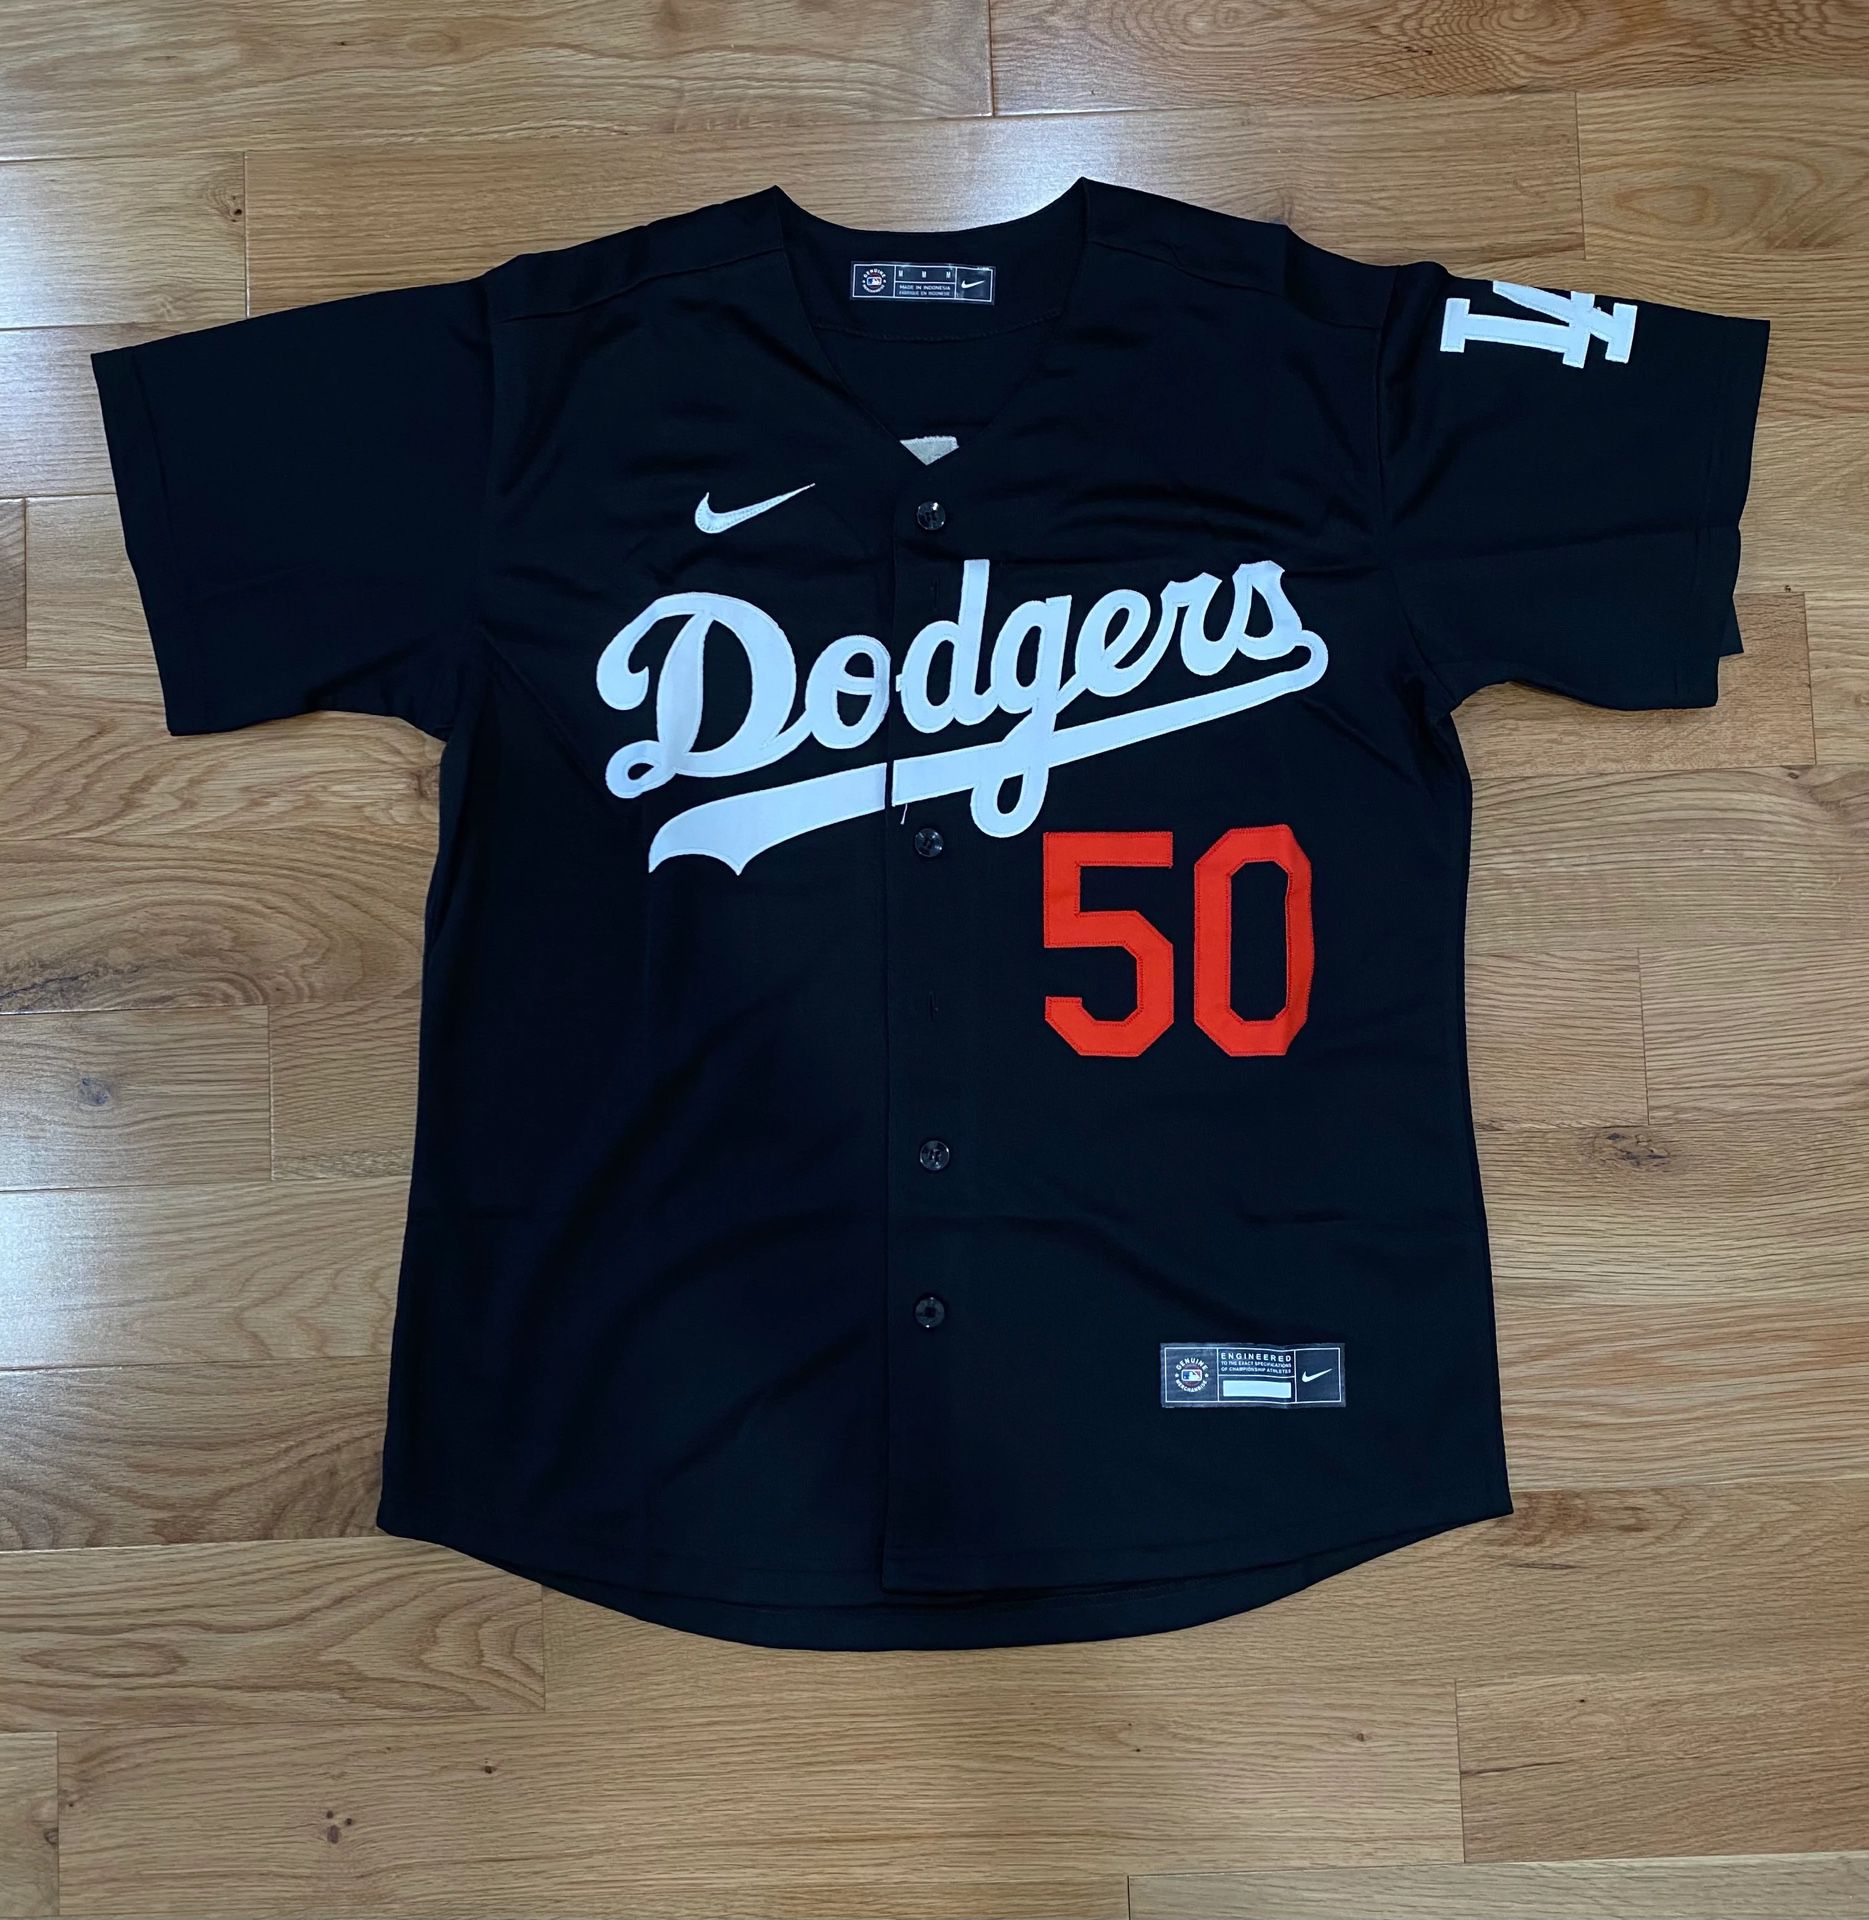 Womens Dodgers Betts #22 black jersey for Sale in Bakersfield, CA - OfferUp